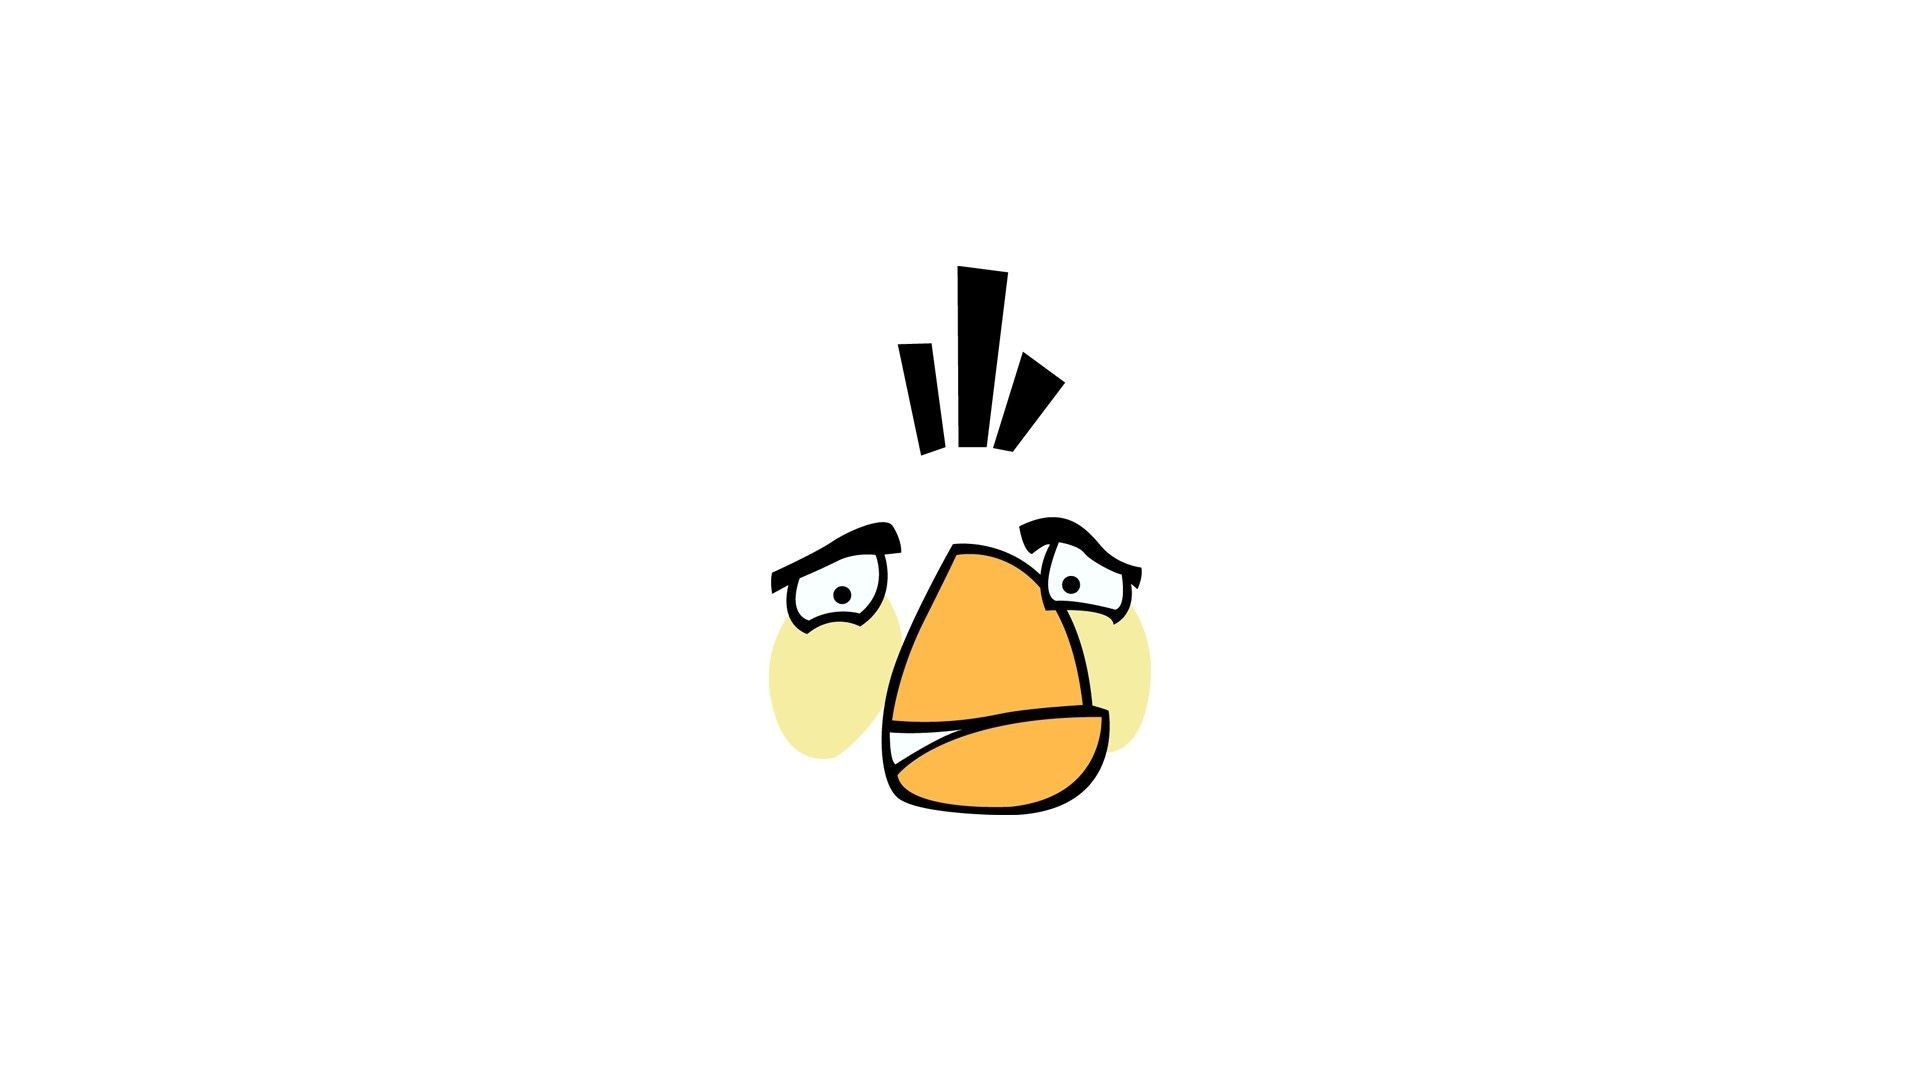 Angry Birds White Bird